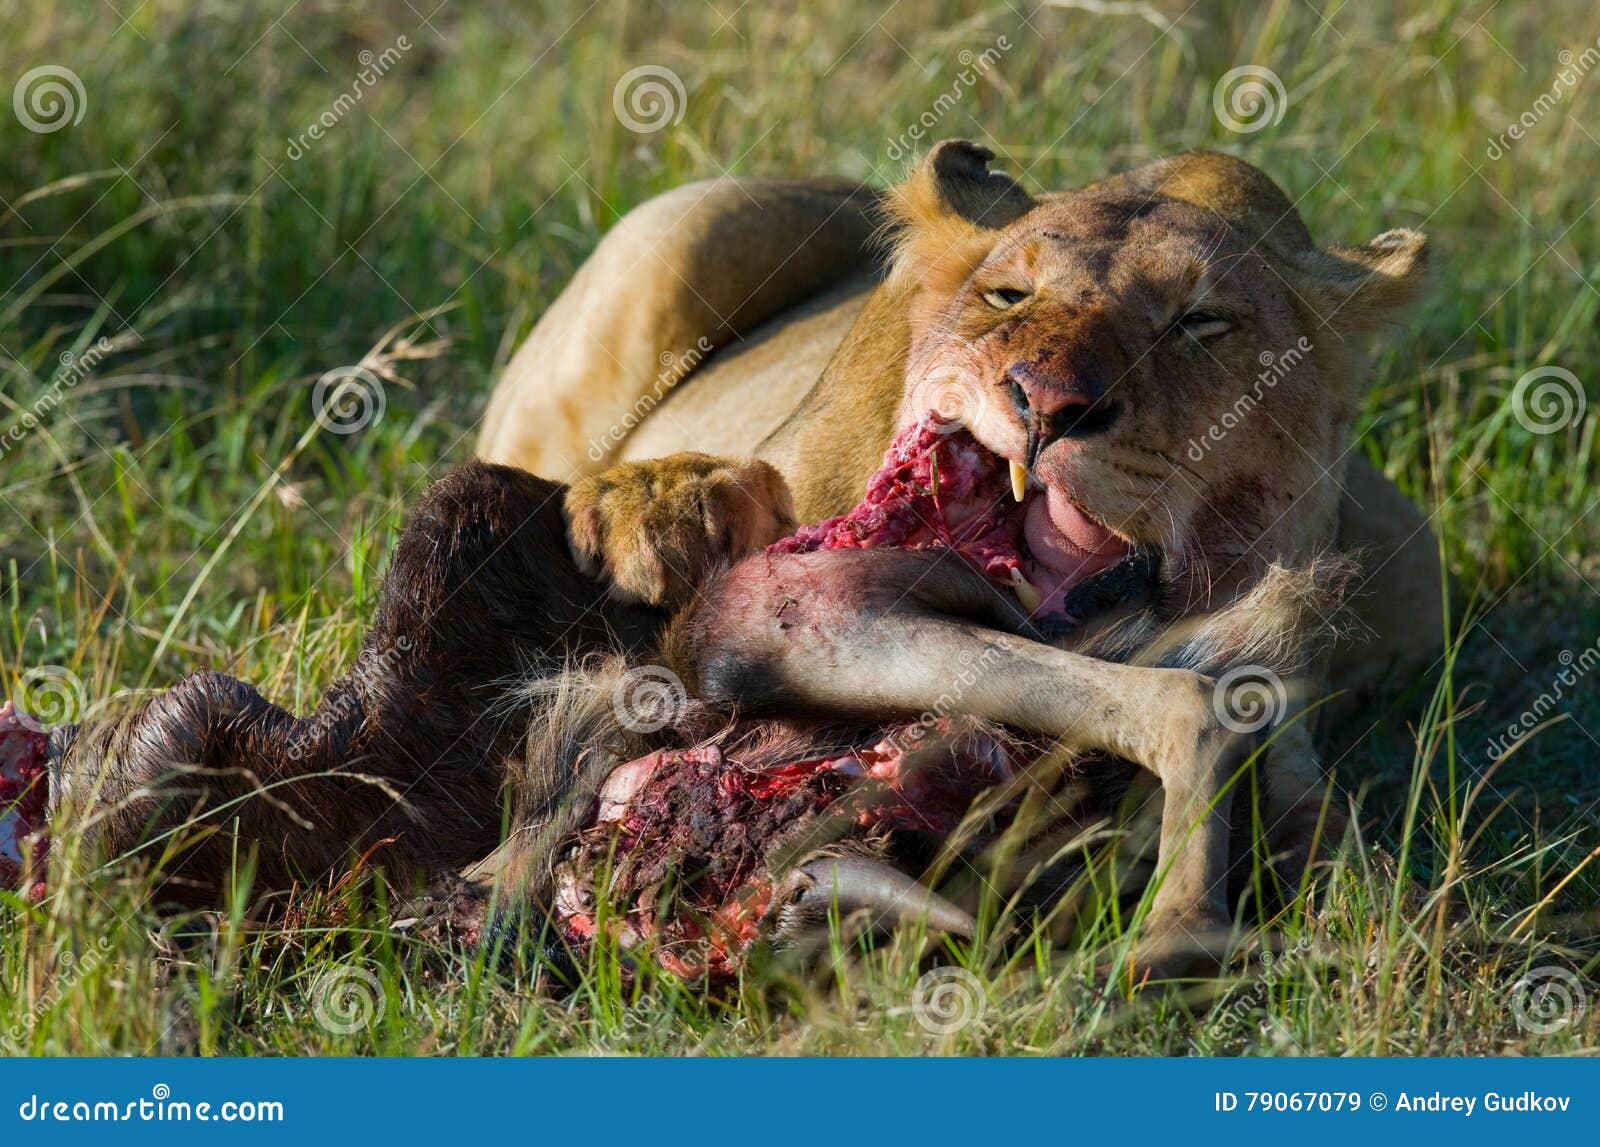 lioness eating killed wildebeest. national park. kenya. tanzania. masai mara. serengeti.